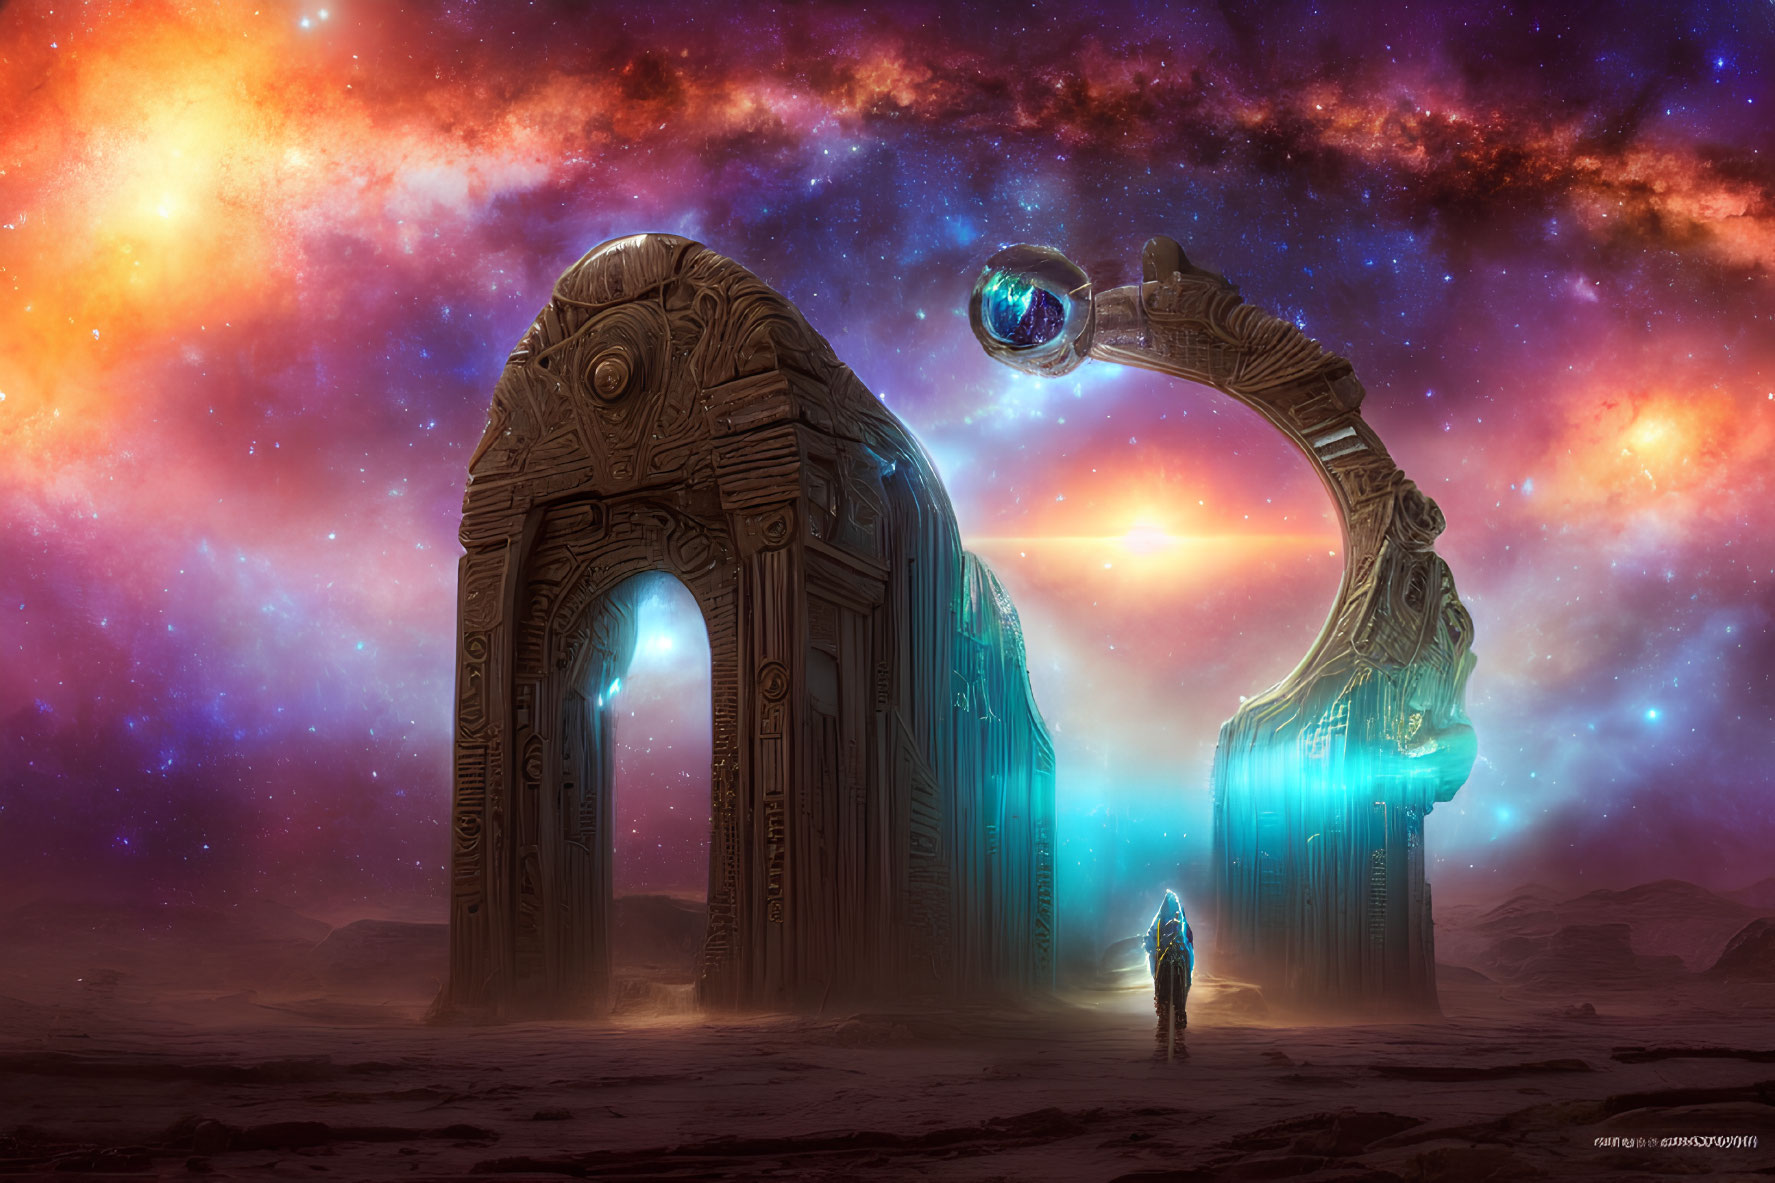 Person standing before large alien gateways in cosmic landscape